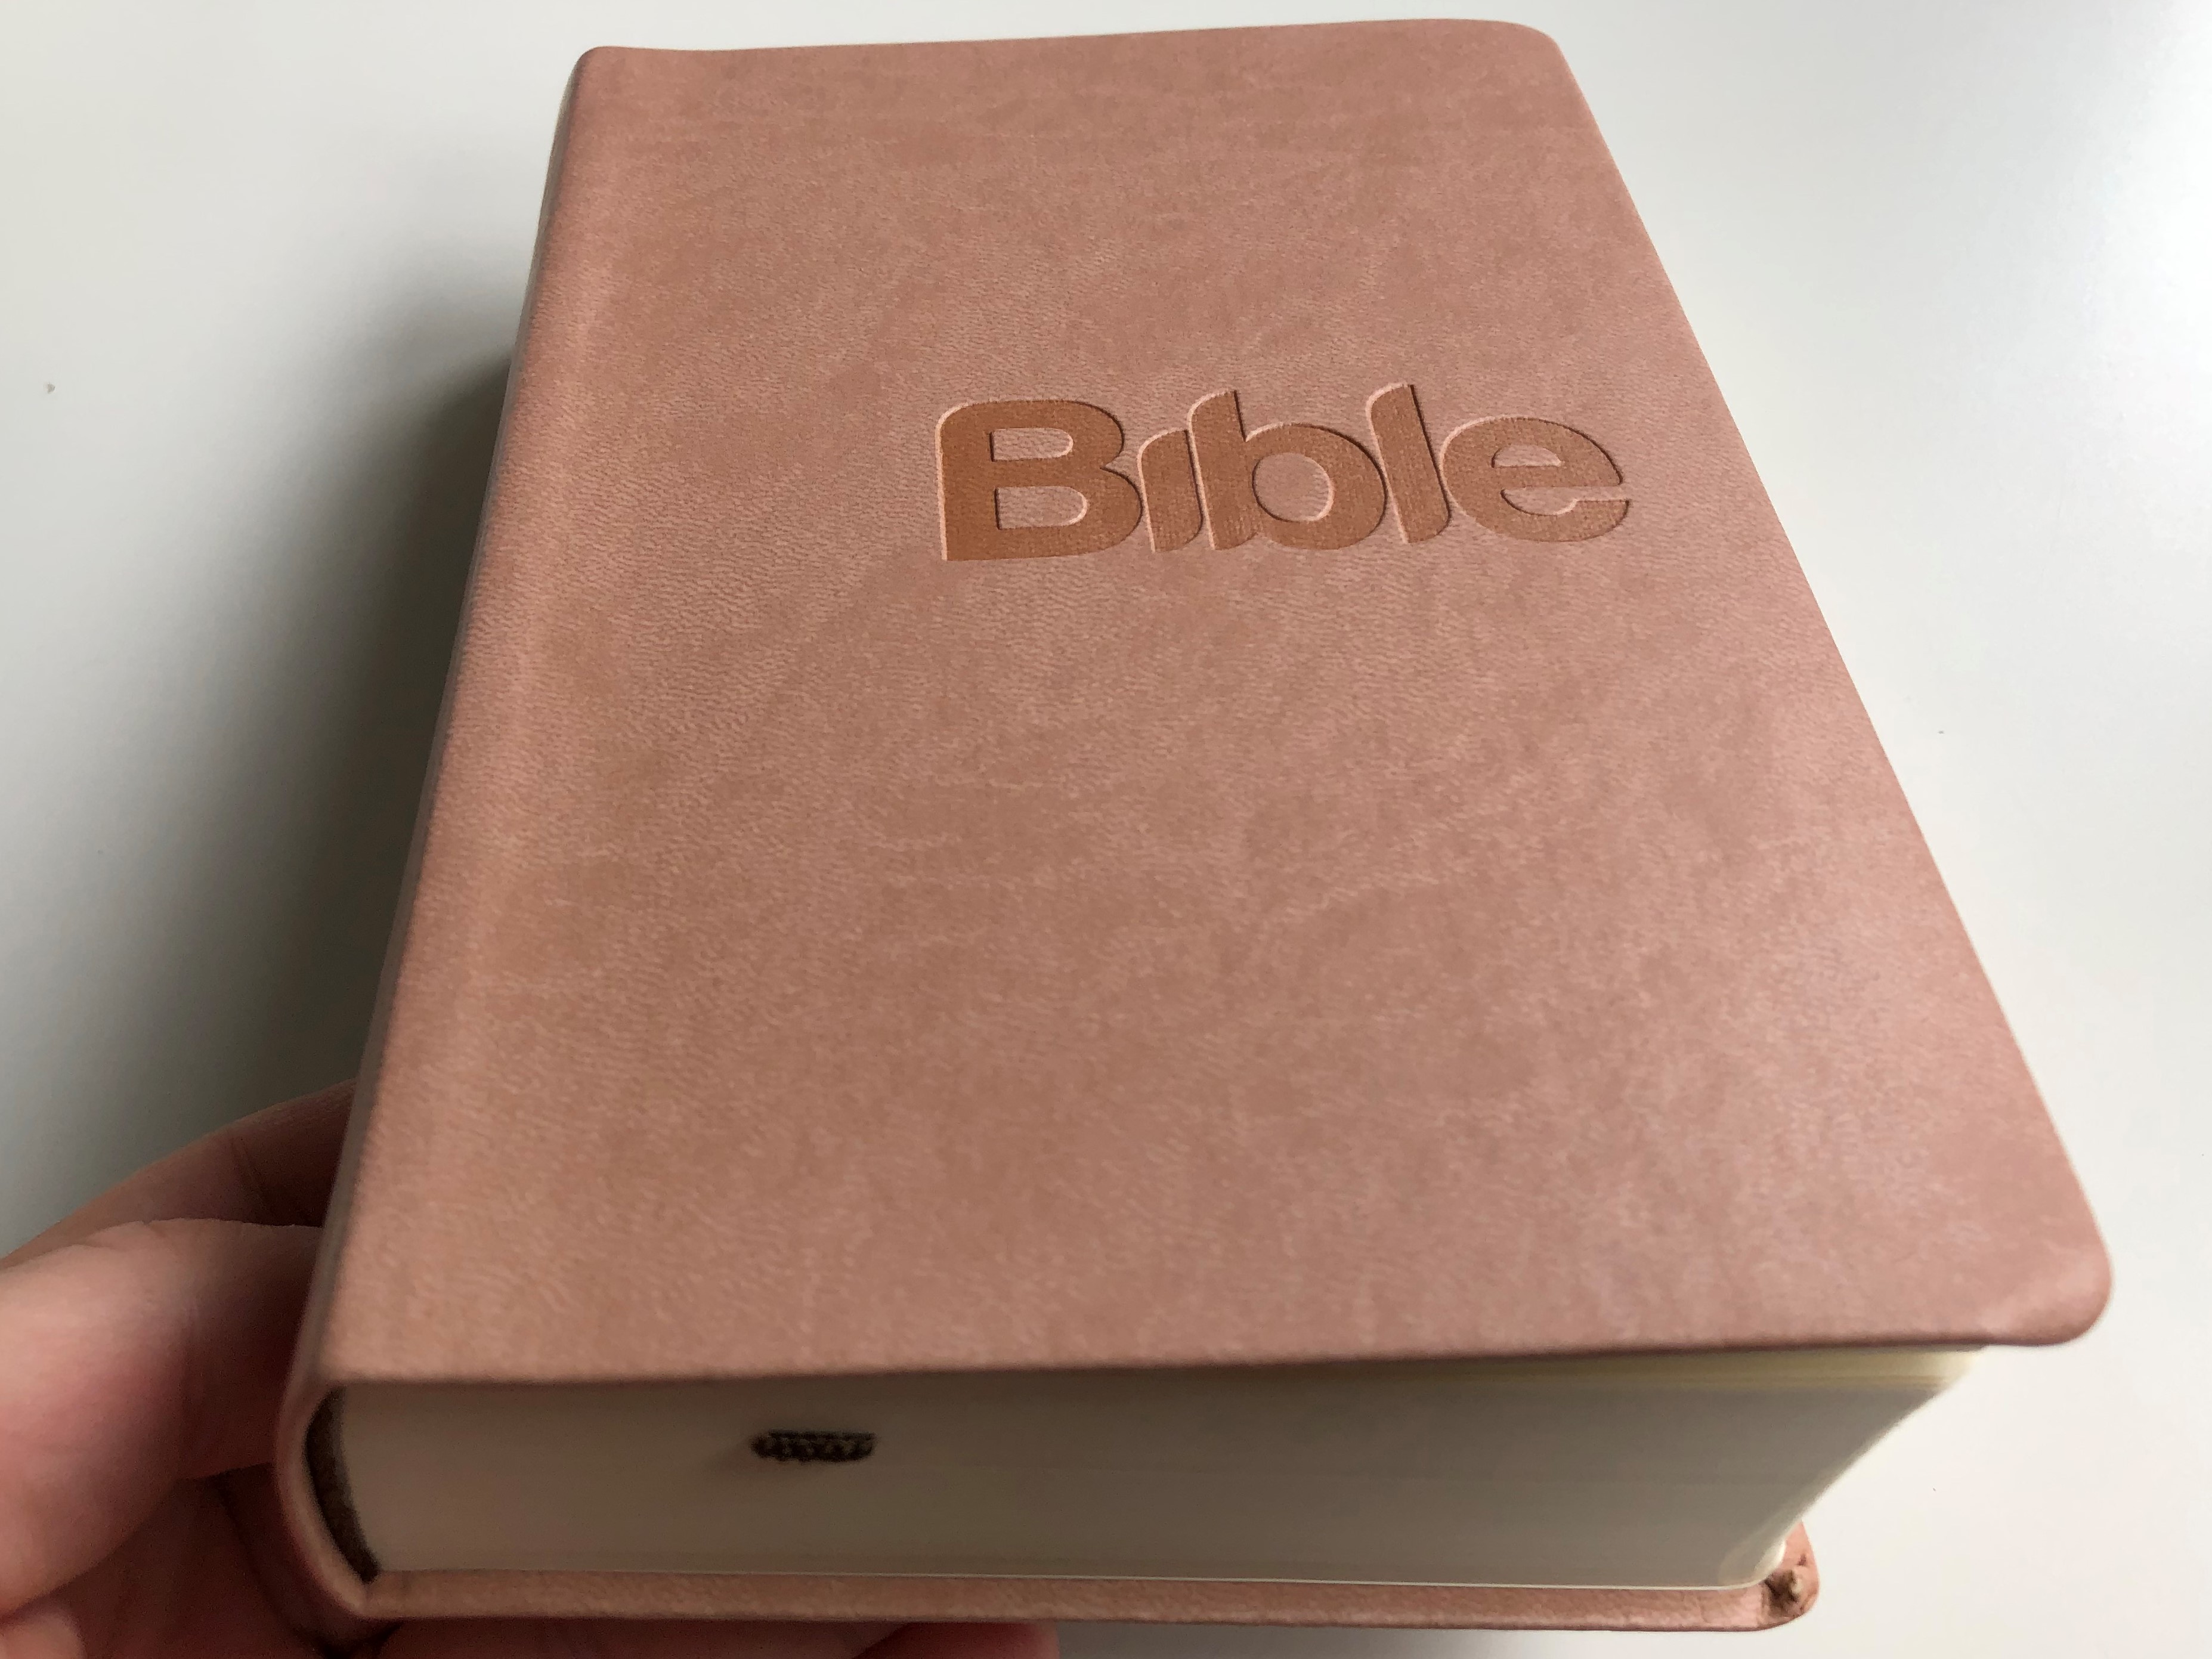 czech-language-bible-21st-century-translation-skin-tone-imitation-leather-cover-2.jpg